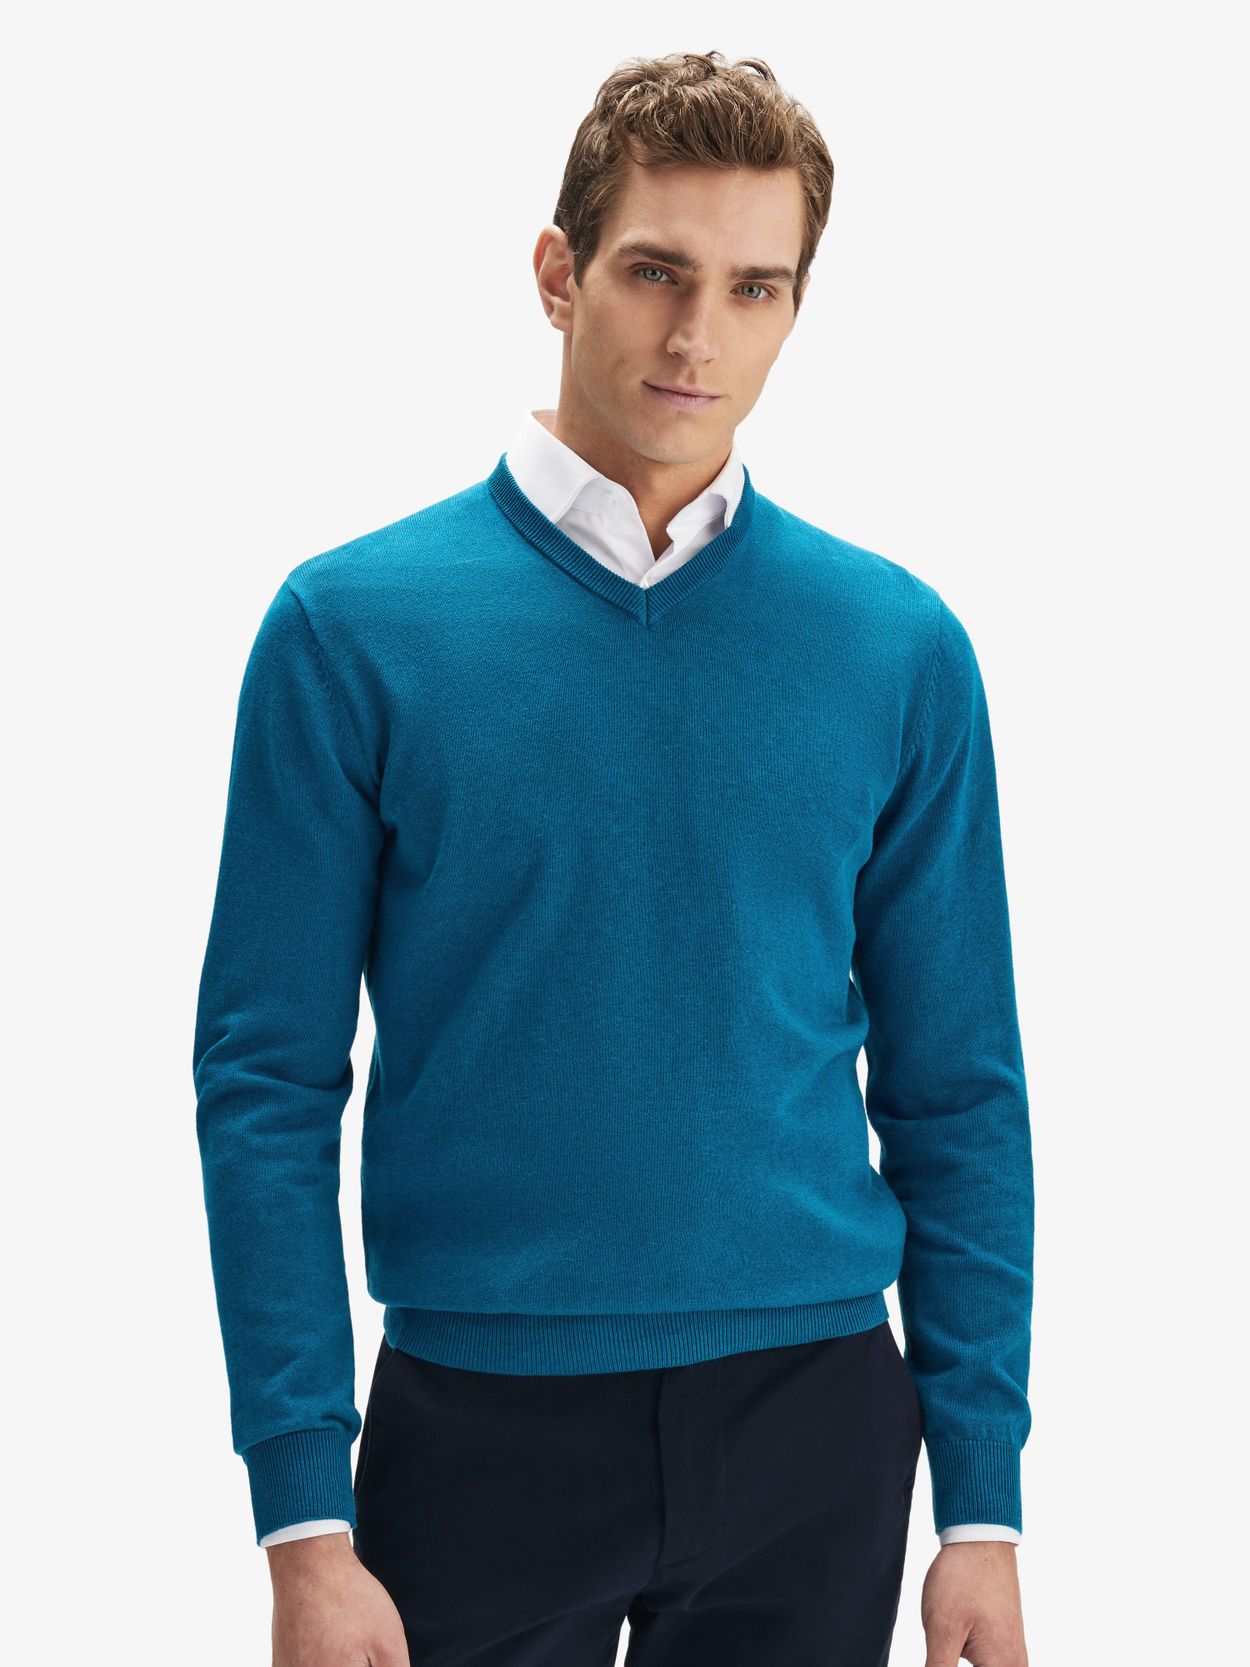 Mid Blue Sweater Cotton